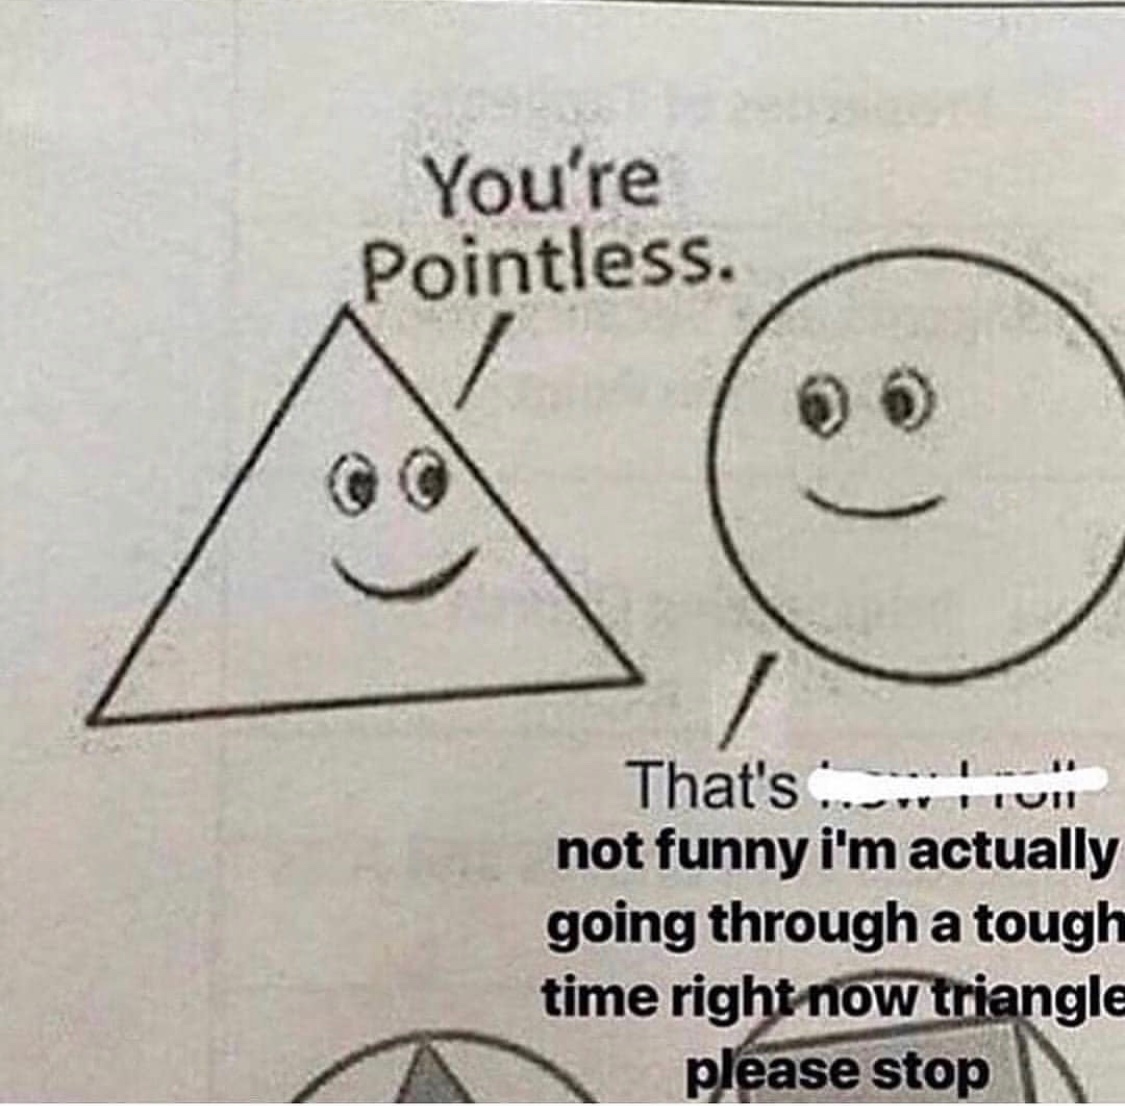 u know that triangles in viagra - meme